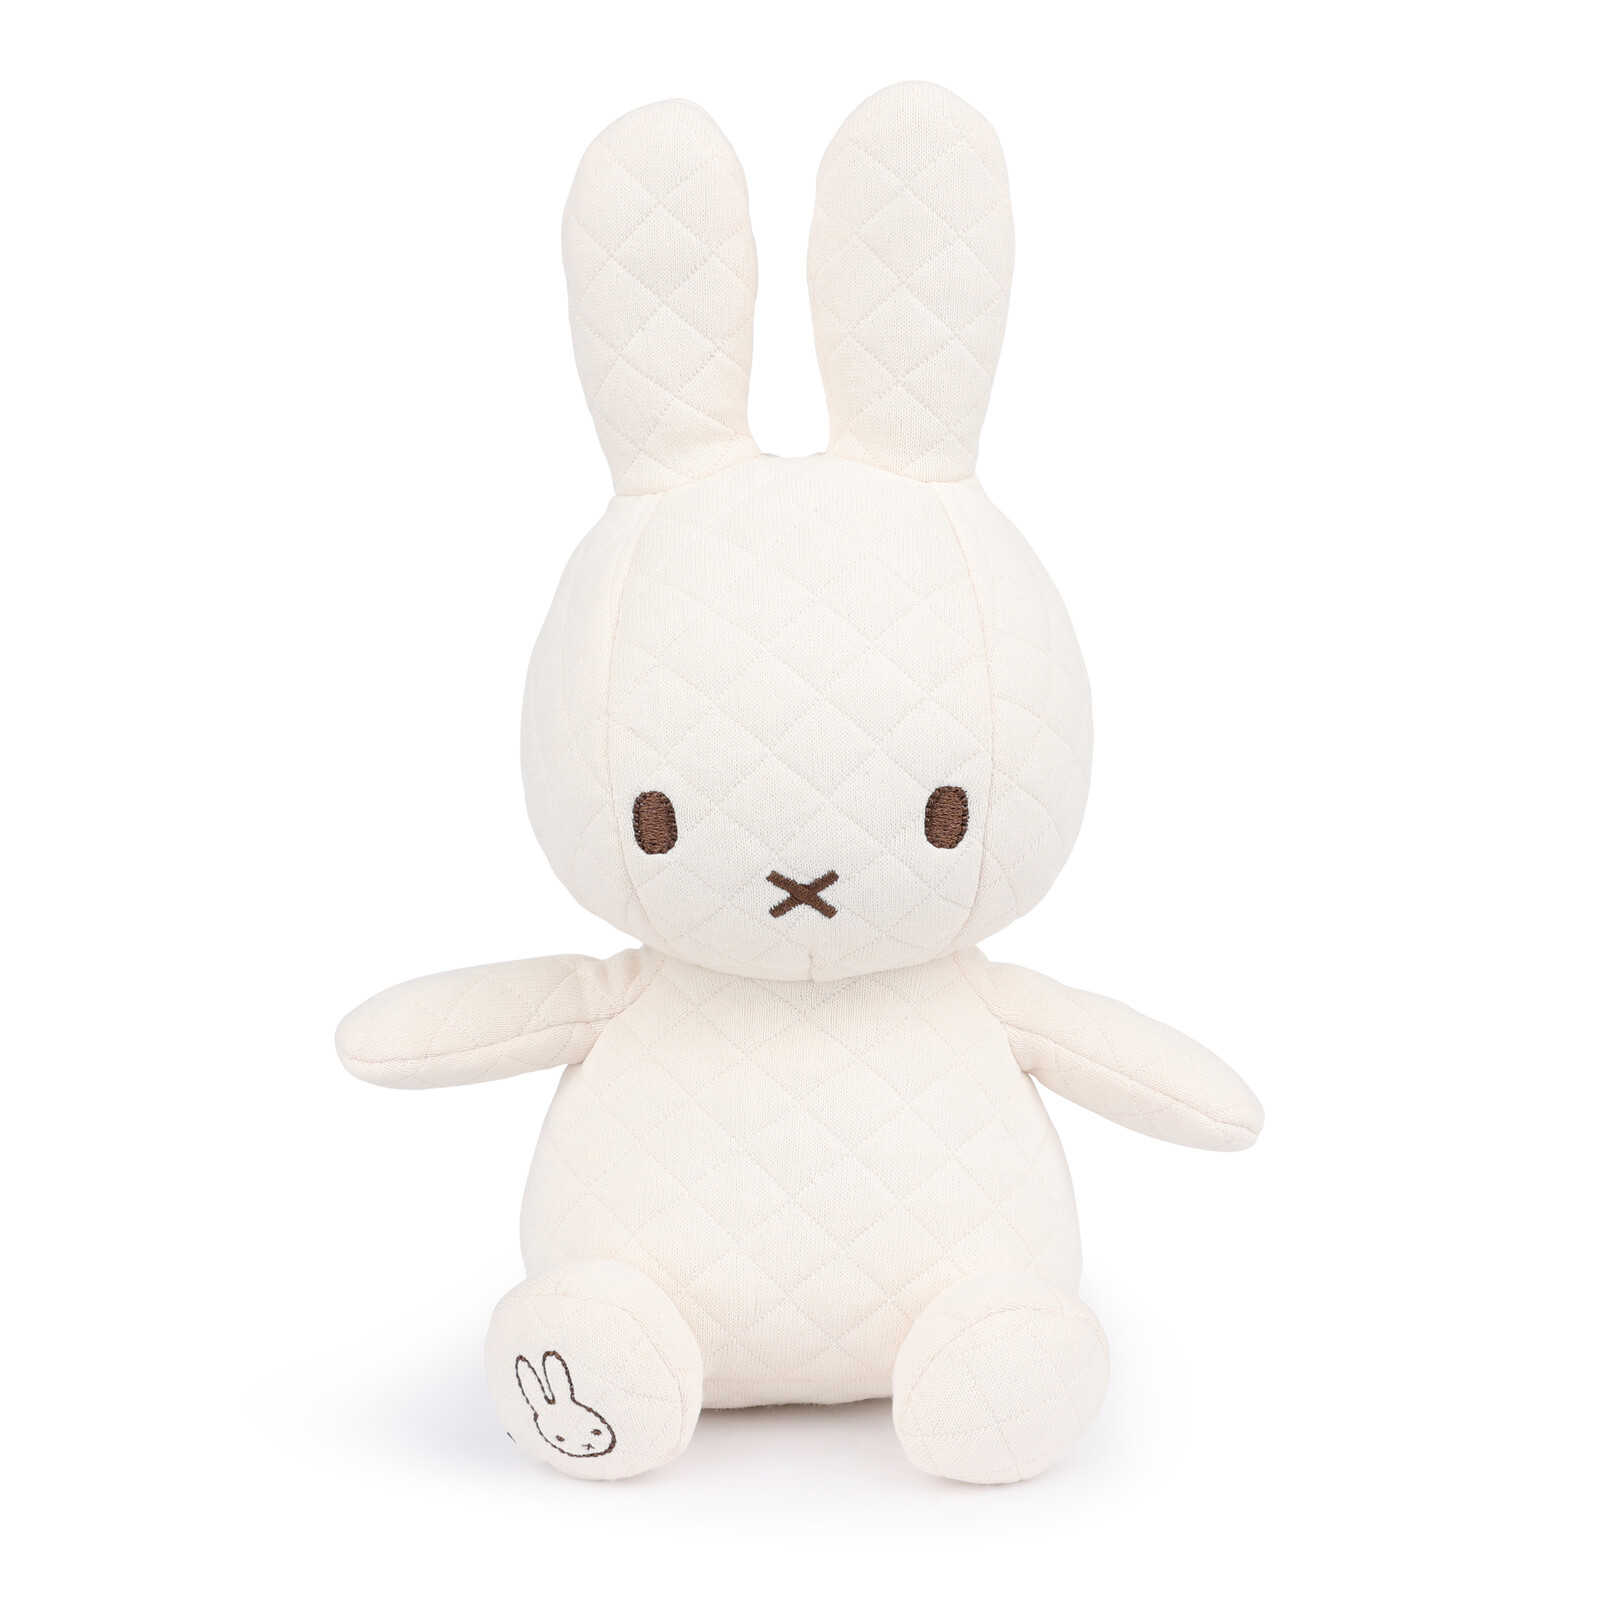 Bonbon Miffy Sitting Cream in giftbox - 23 cm - 9"